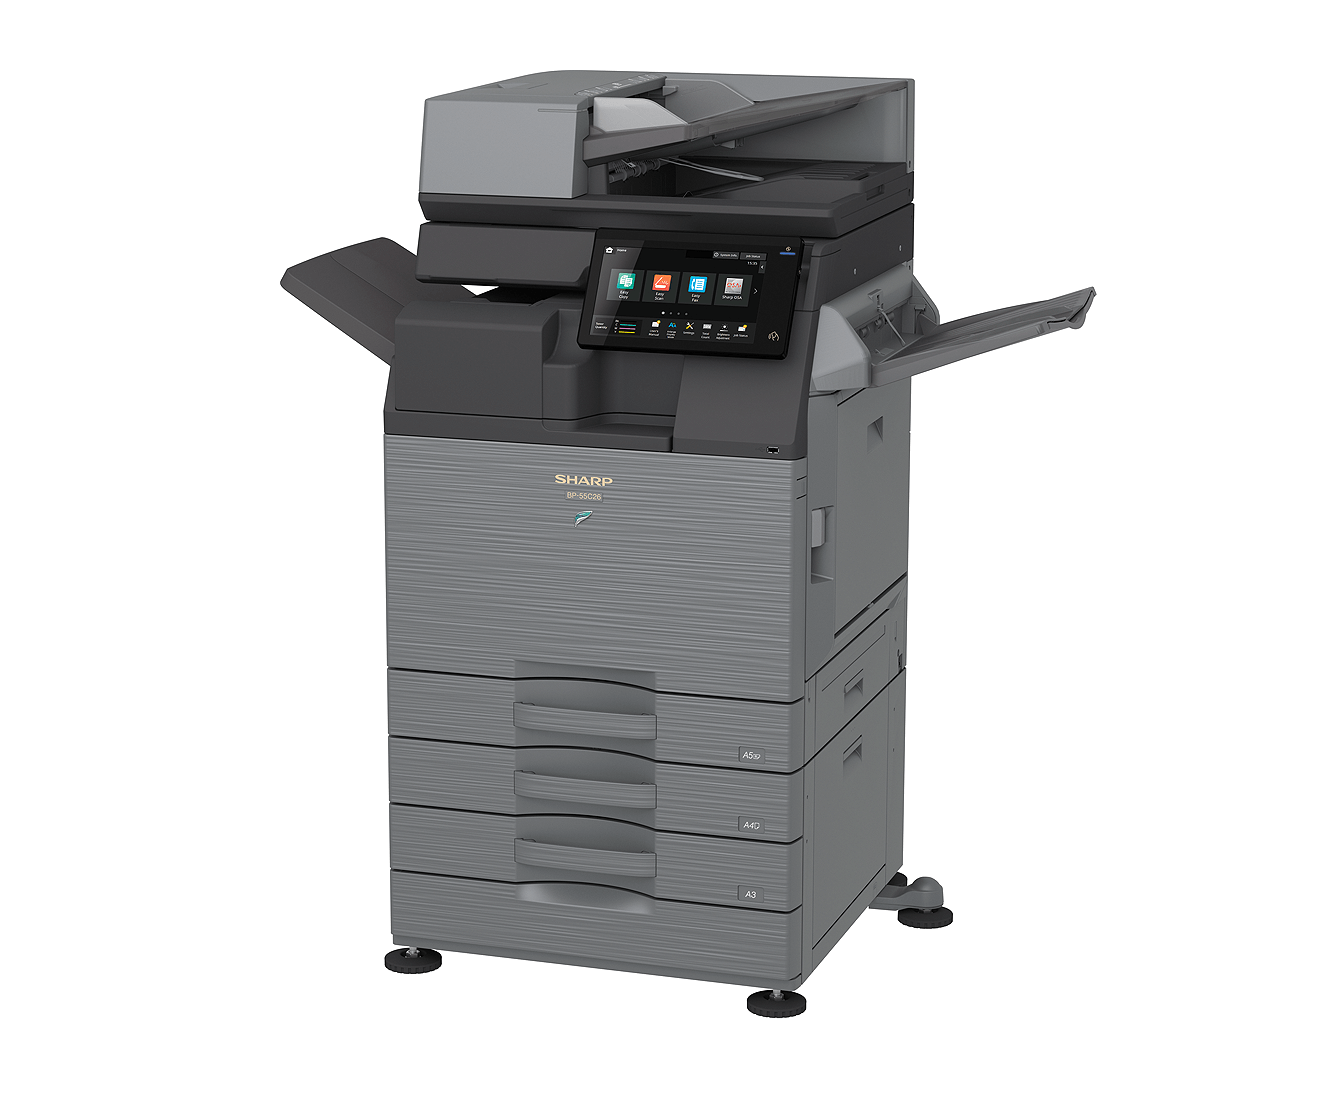 SHARP Colour Multifunction Printers – QuebeCopier Plus